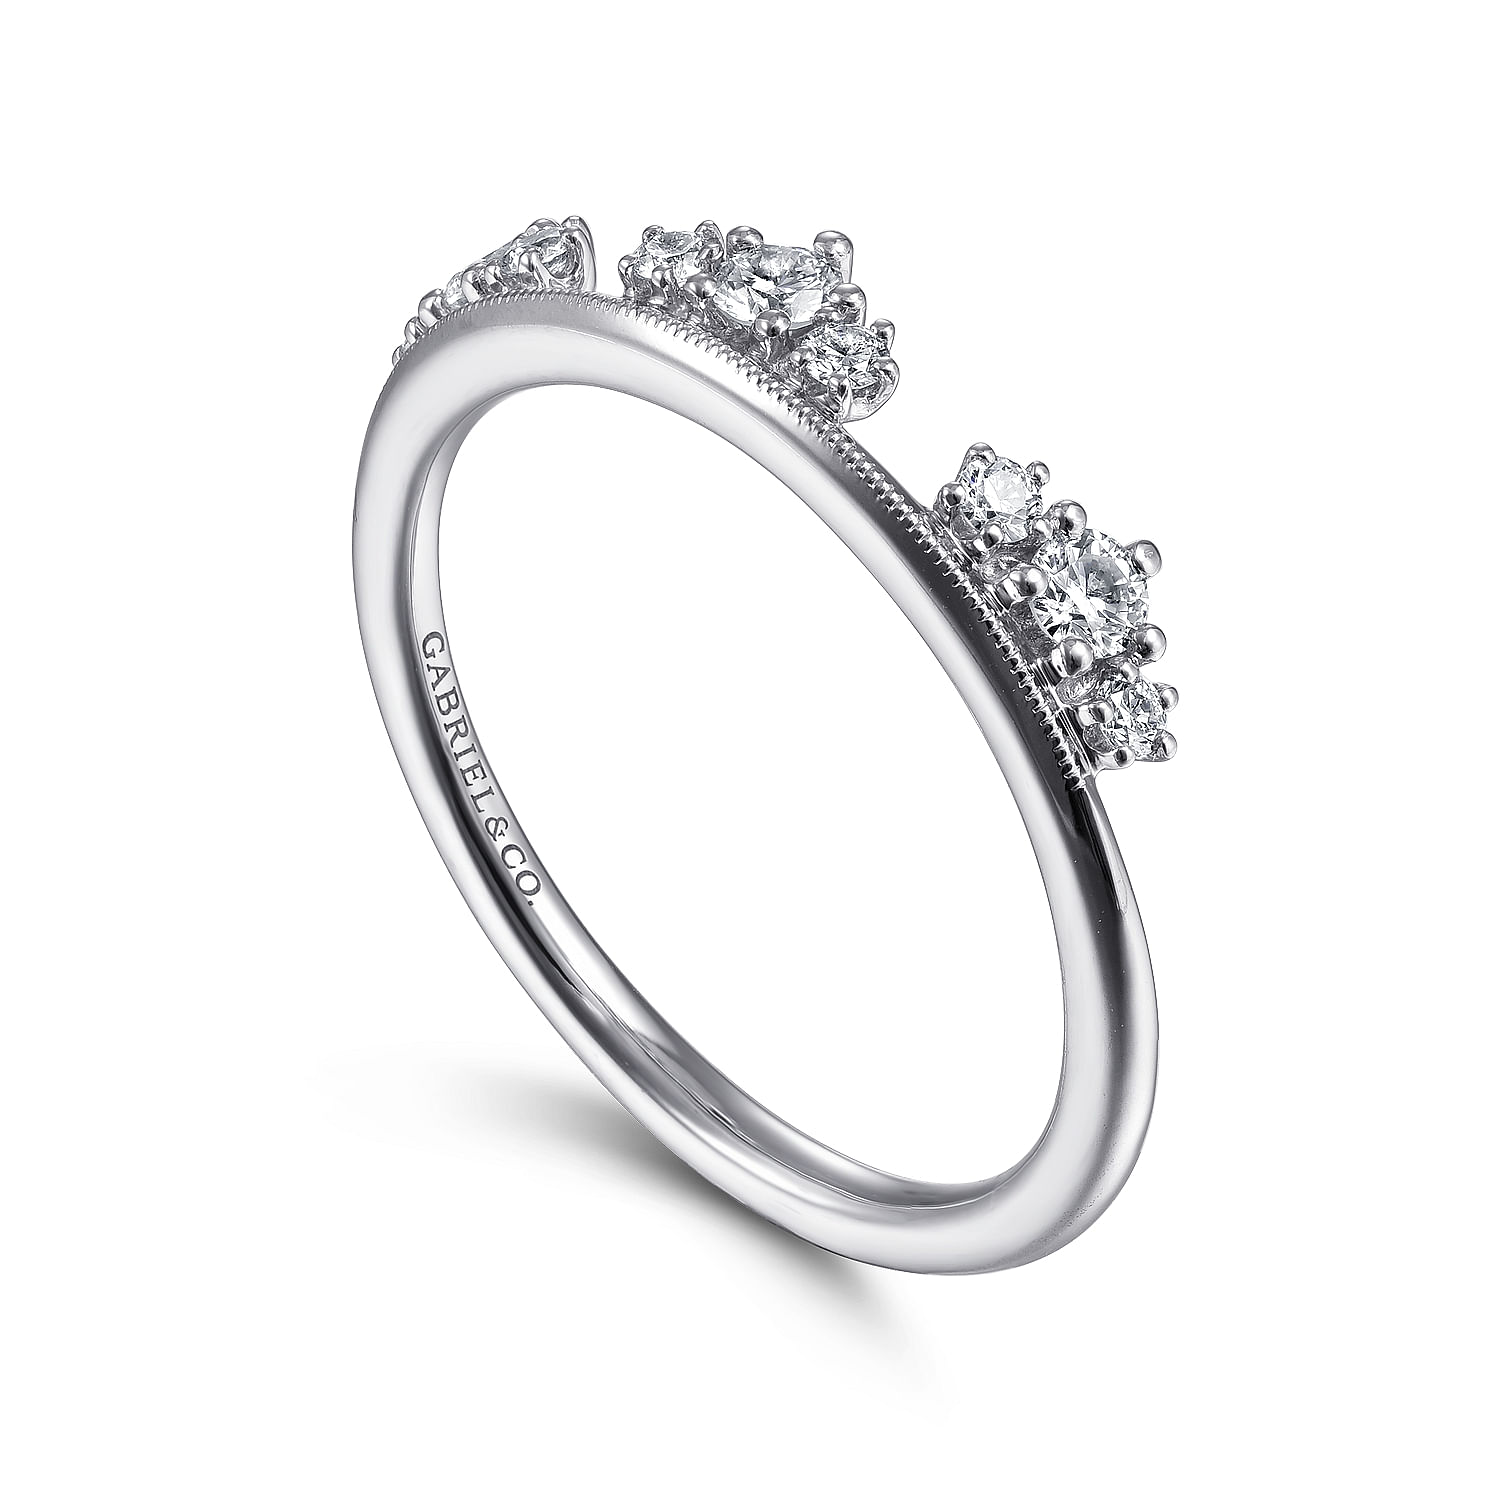 14K White Gold Diamond Cluster Crown Ring